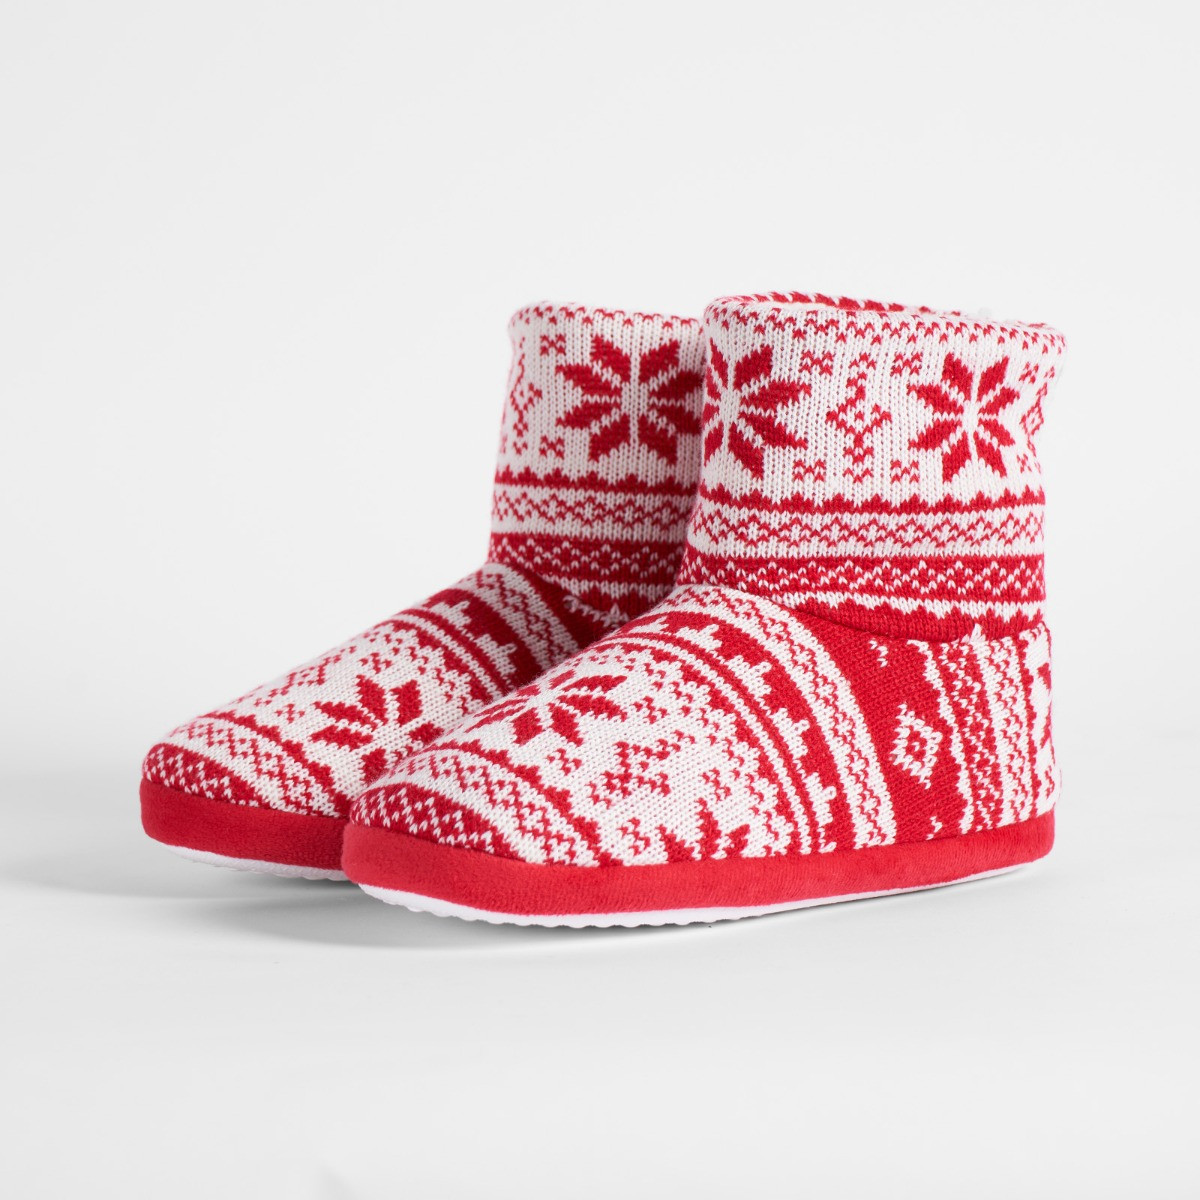 Update 81+ nordic slippers